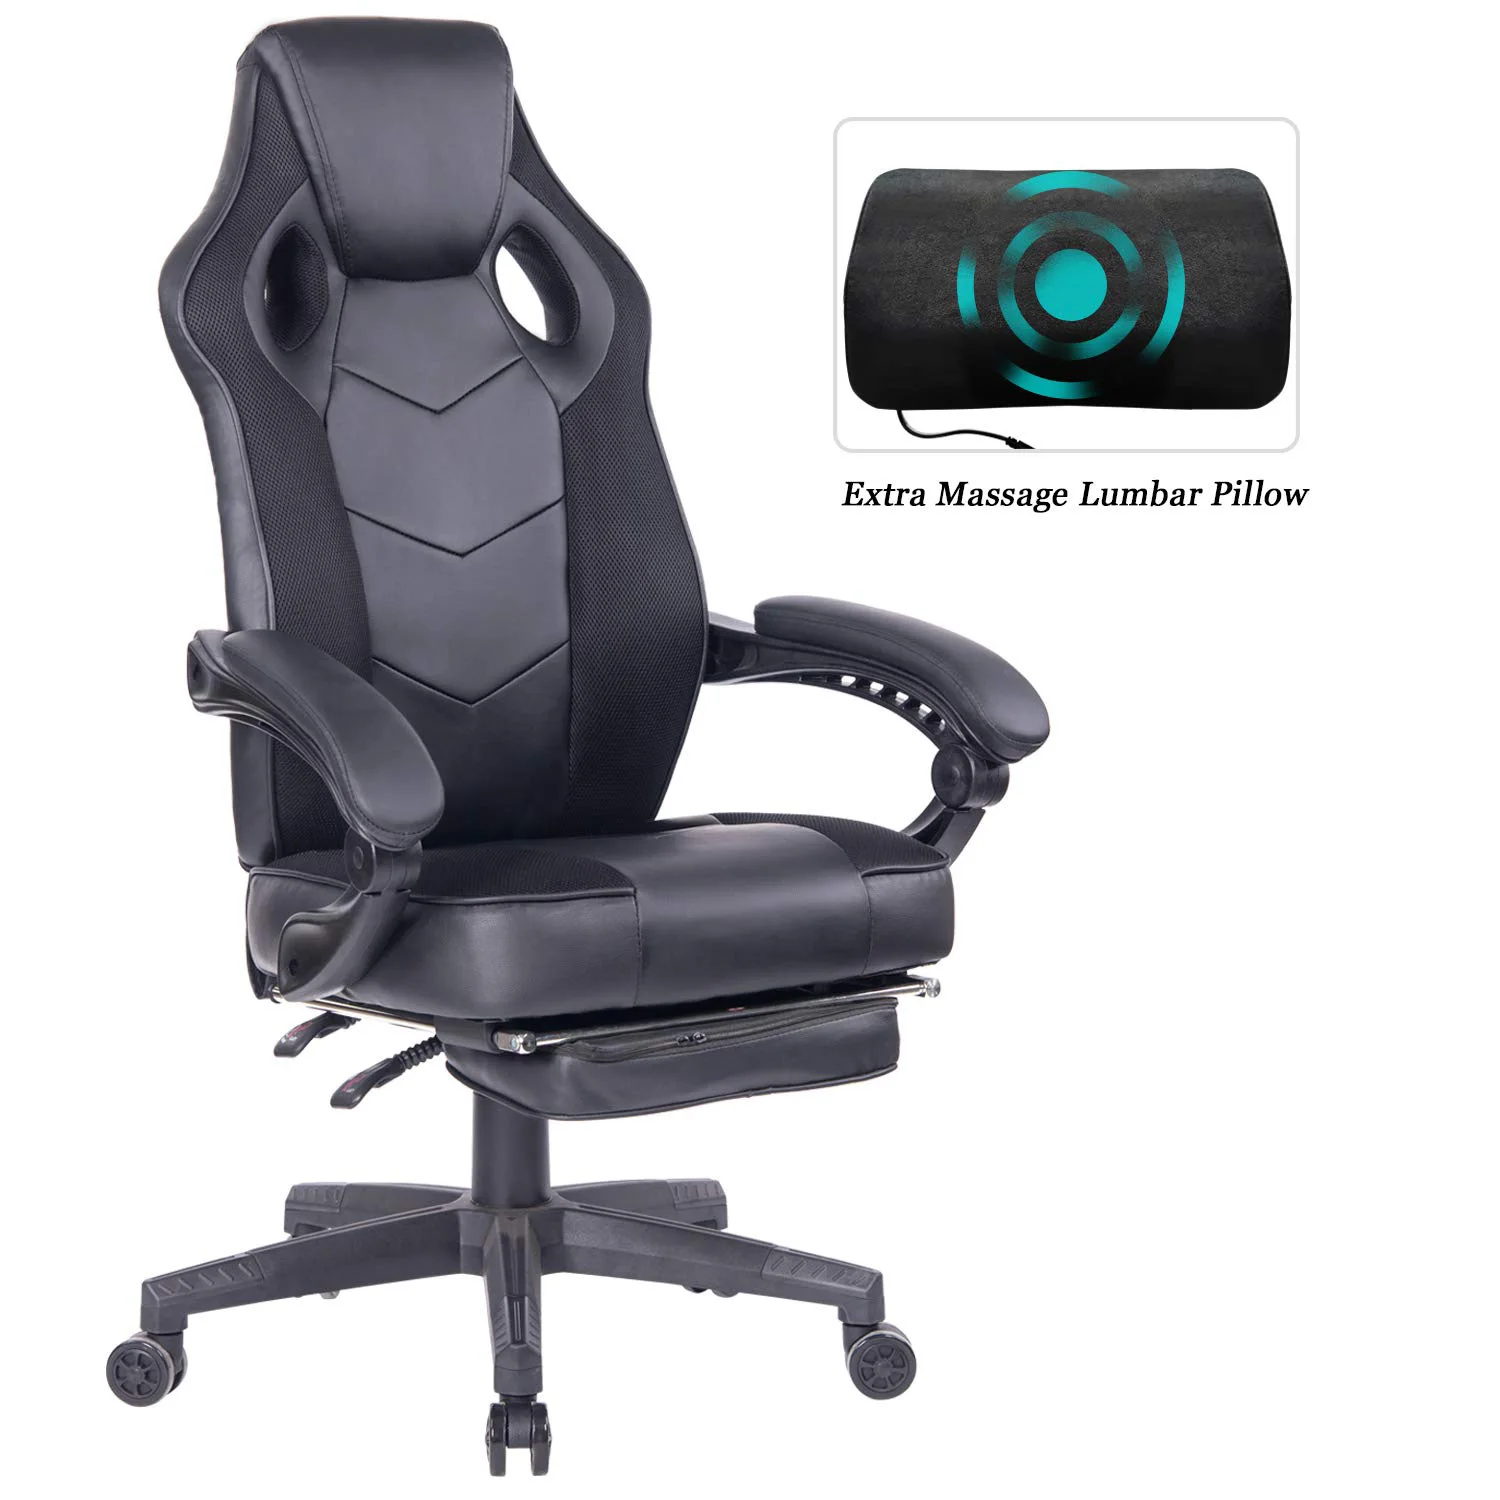 9013 Enjoyable Linkage Armrest Scorpion Gaming Chair 200kg Buy Gaming Chair With 200kg Ace Gaming Chair Scorpion Gaming Chair Product On Alibaba Com